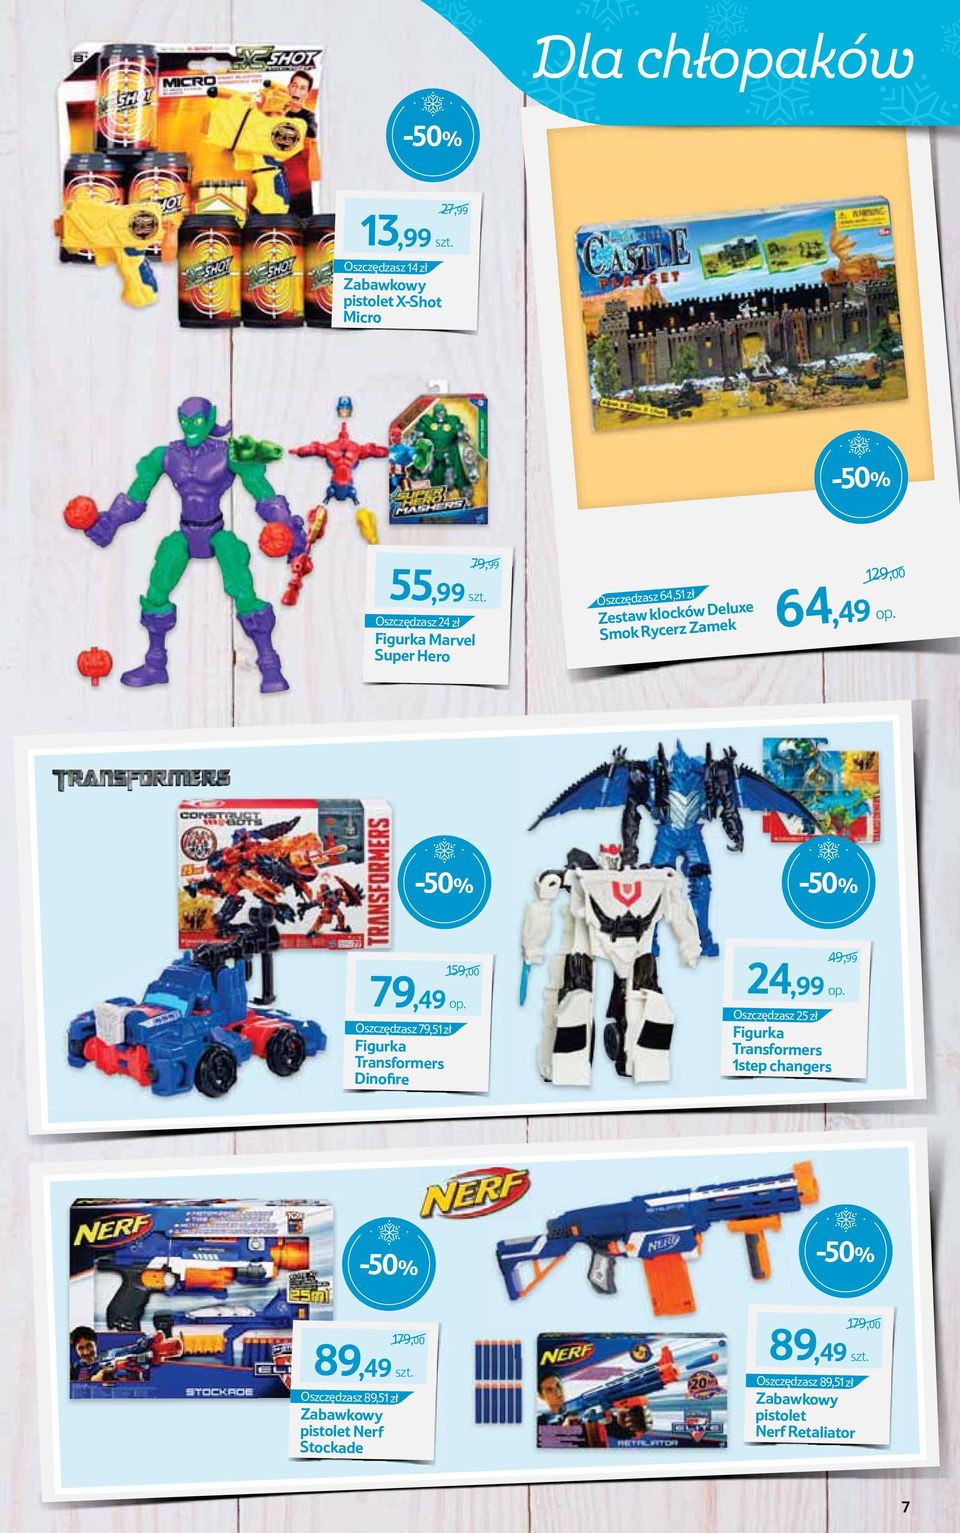 159,00 79,49 op. Oszczędzasz 79,51 zł Figurka Transformers Dinofire 49,99 24,99 op.